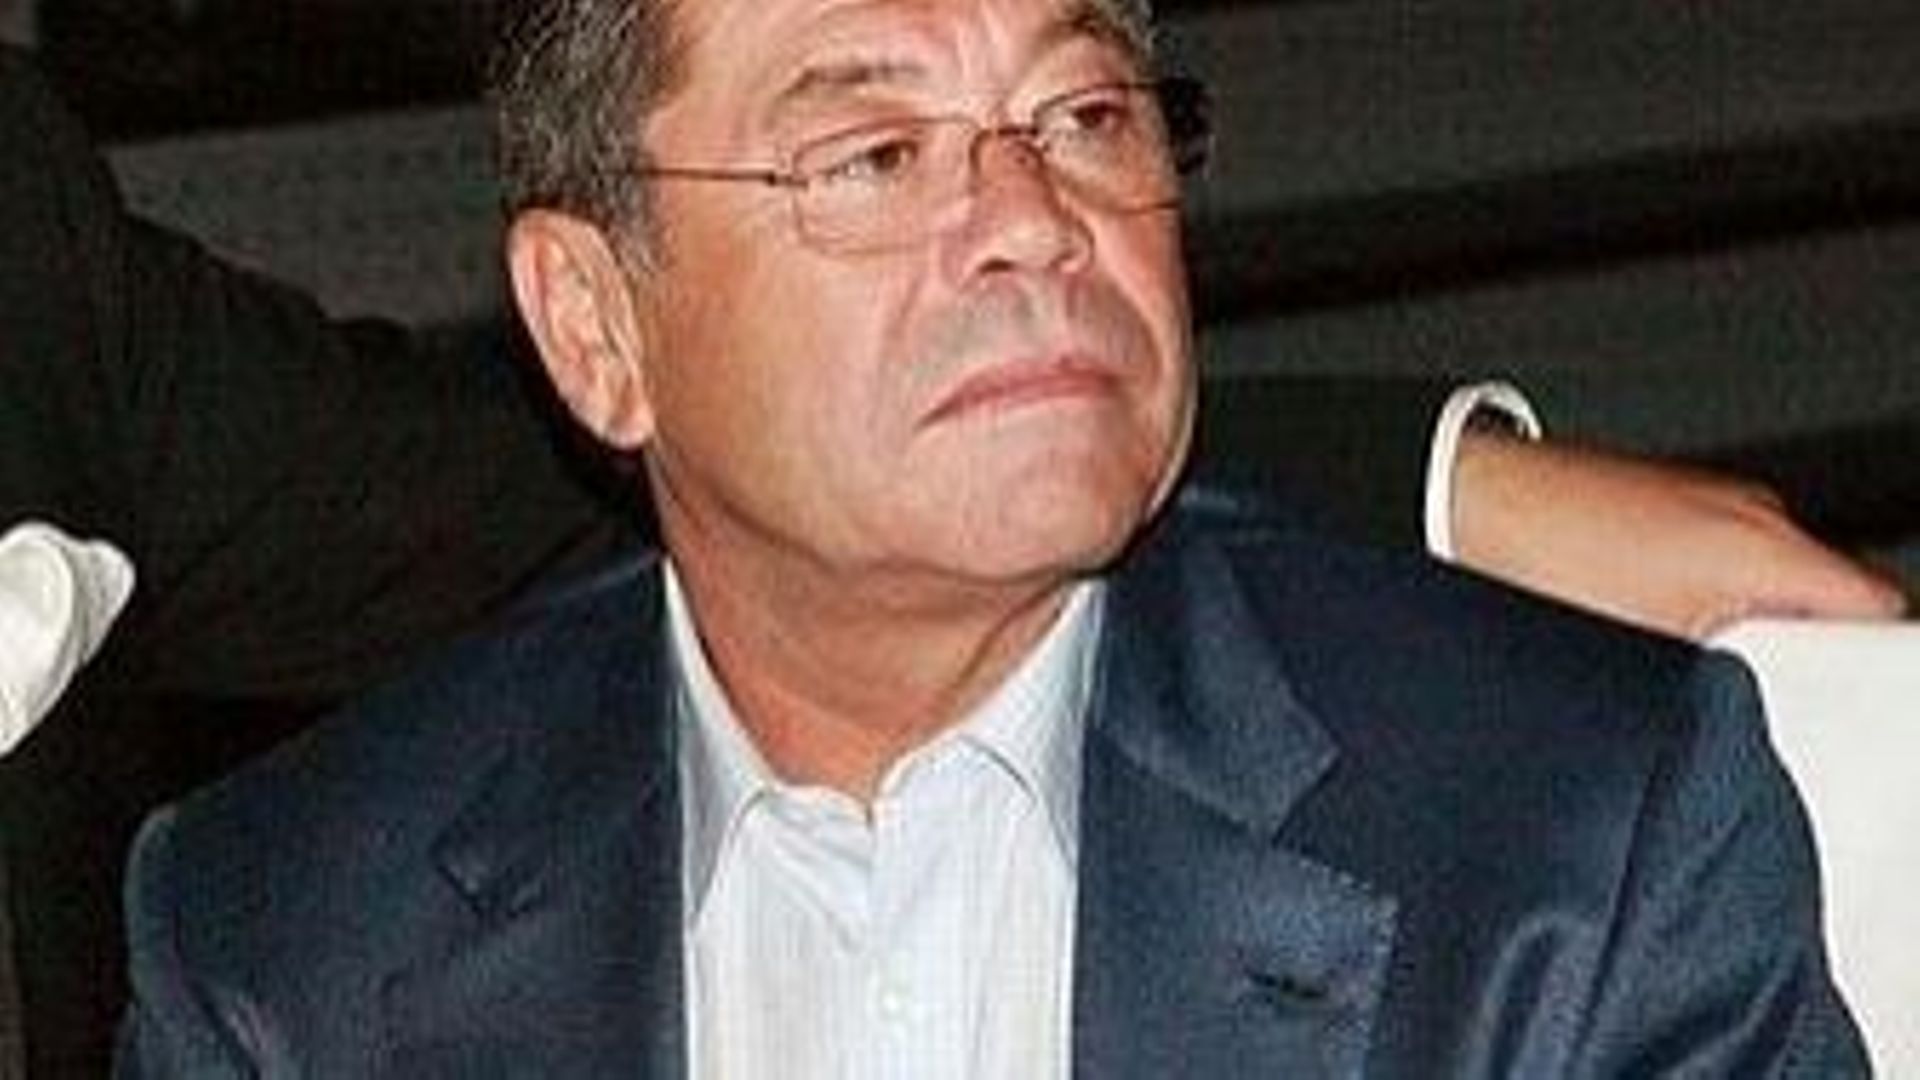 Patokh Chodiev